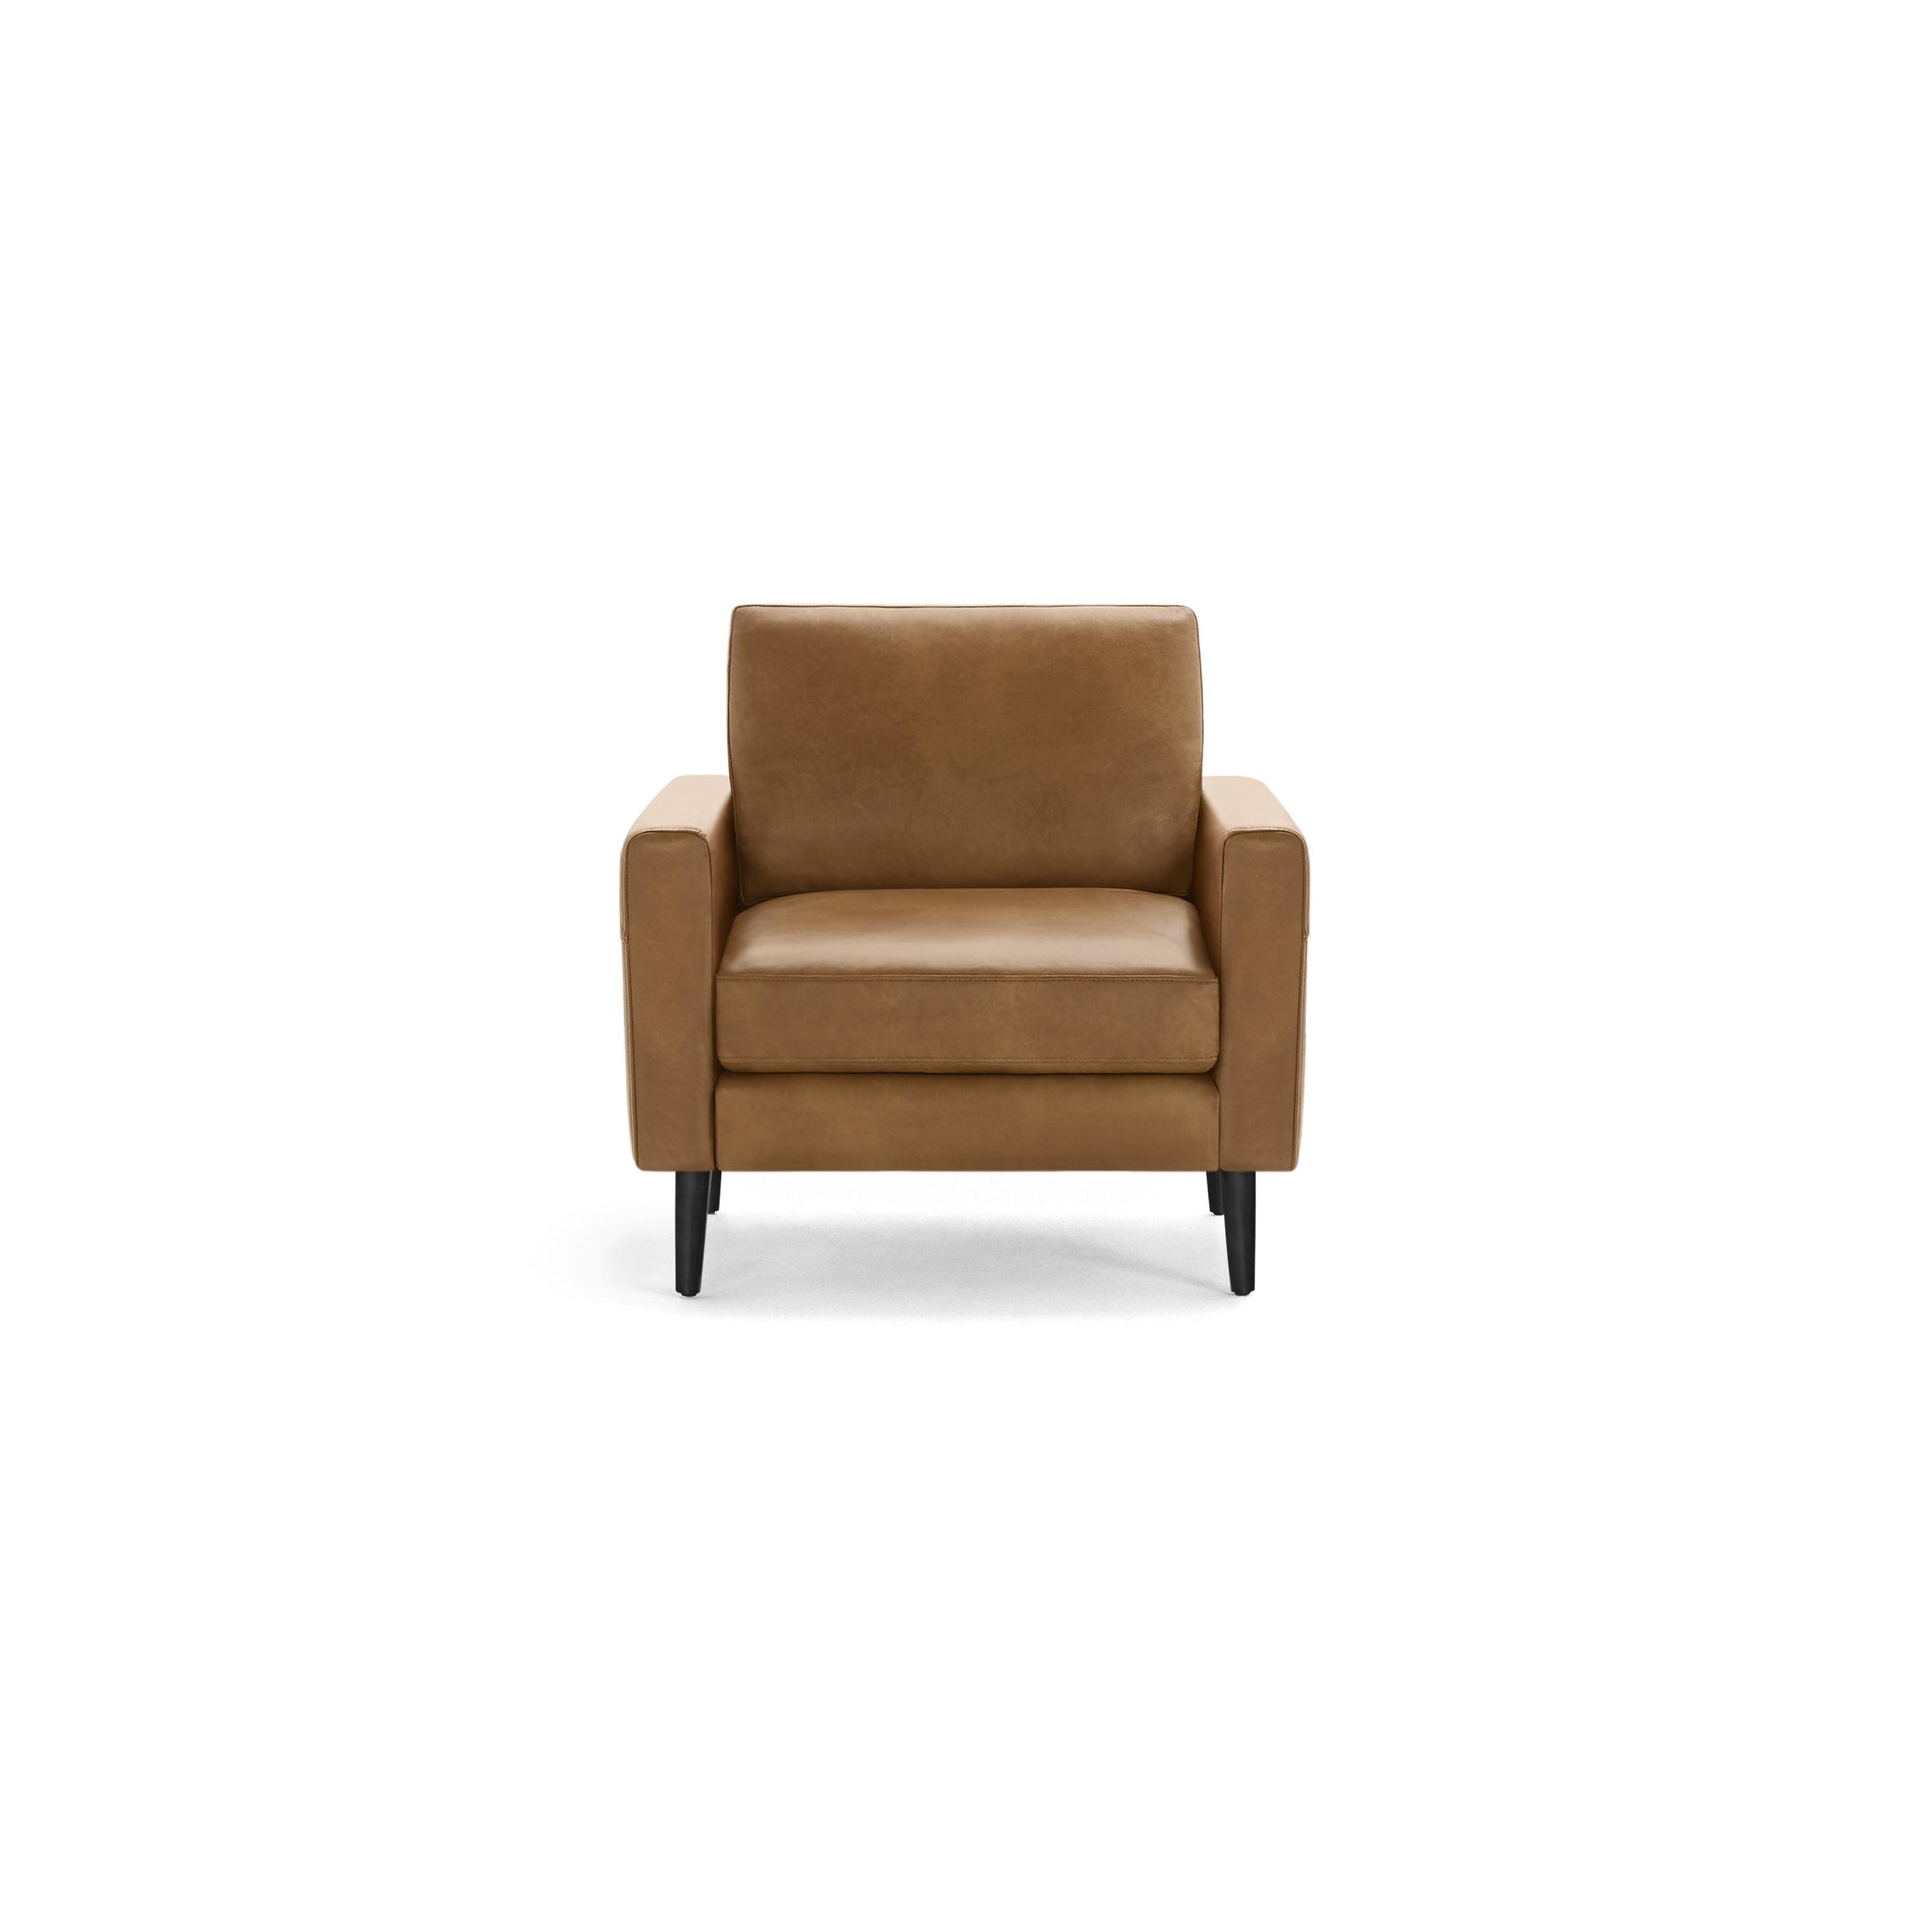 Nomad Leather Club Chair in Camel, Ebony Legs, Leg Finish: EbonyLegs - Image 0